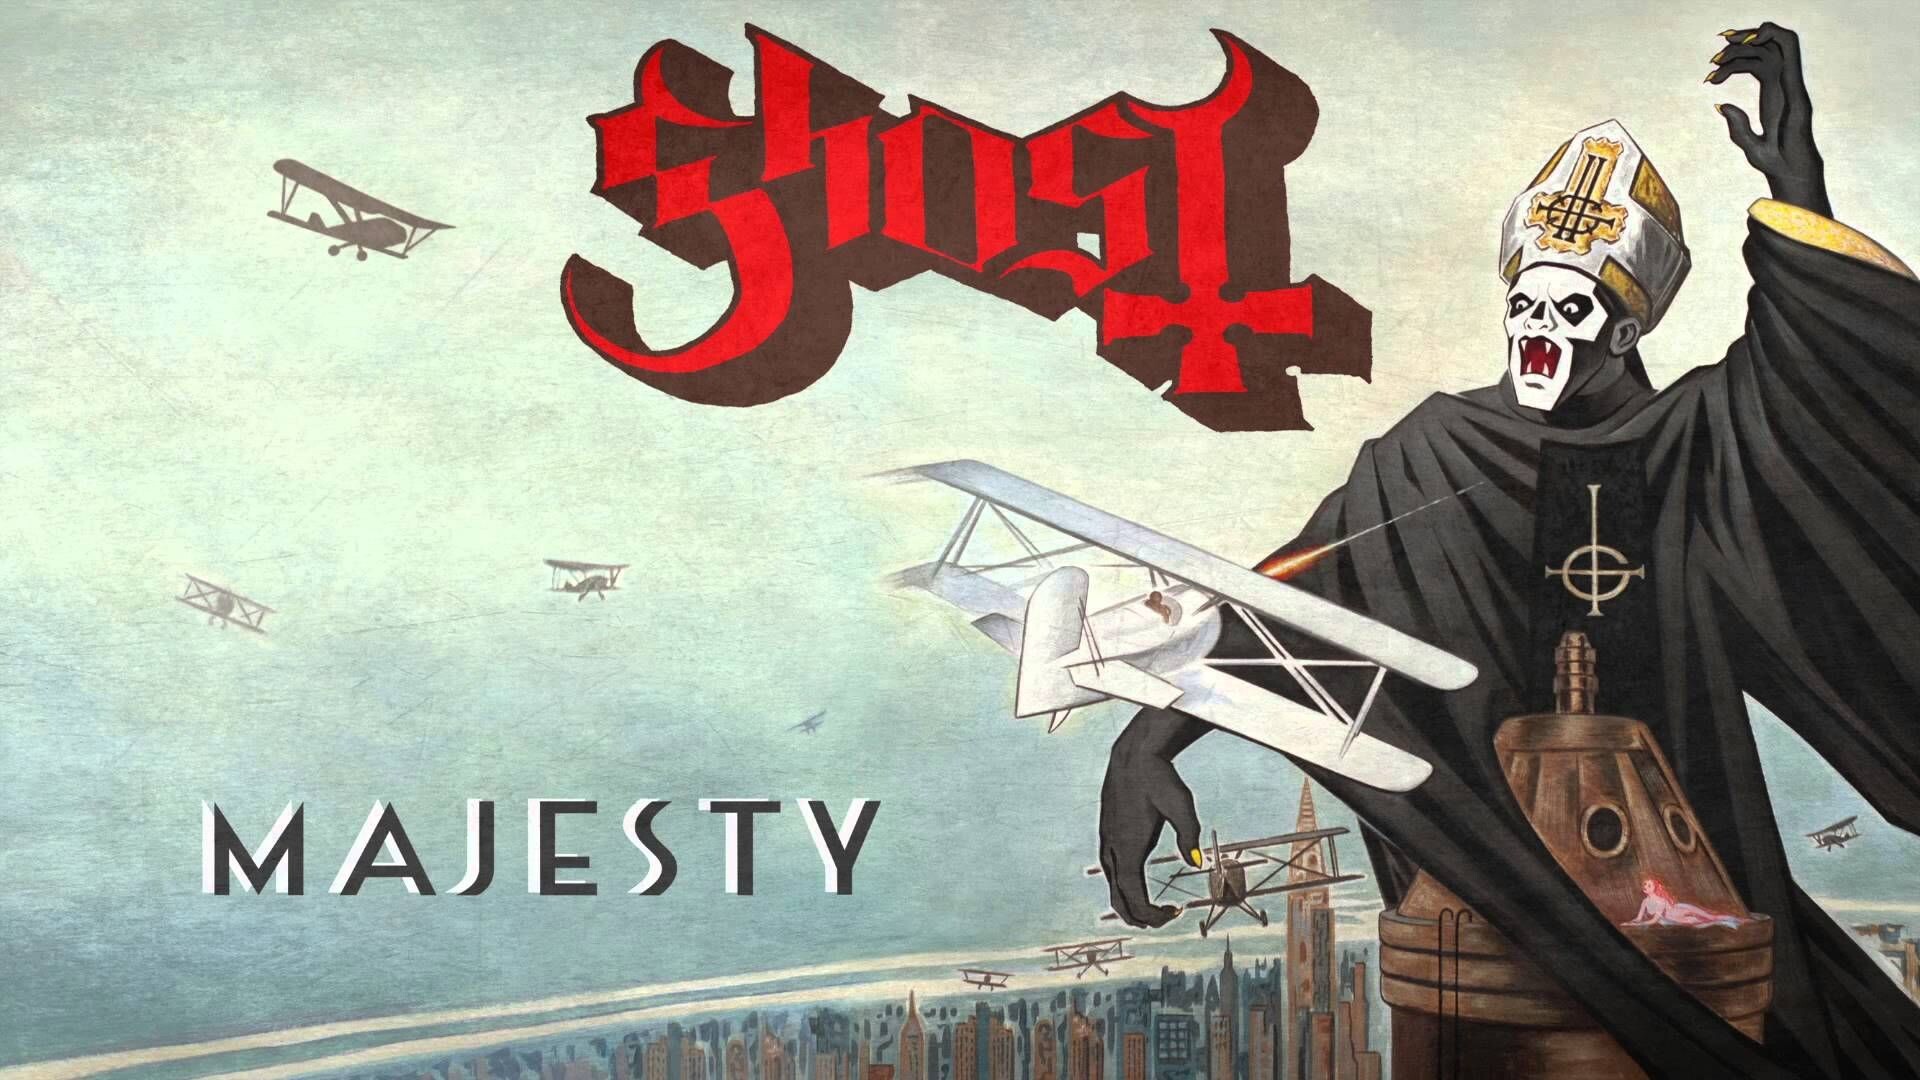 Ghost band, New album, Majesty's release, Ghostly lyrics, 1920x1080 Full HD Desktop